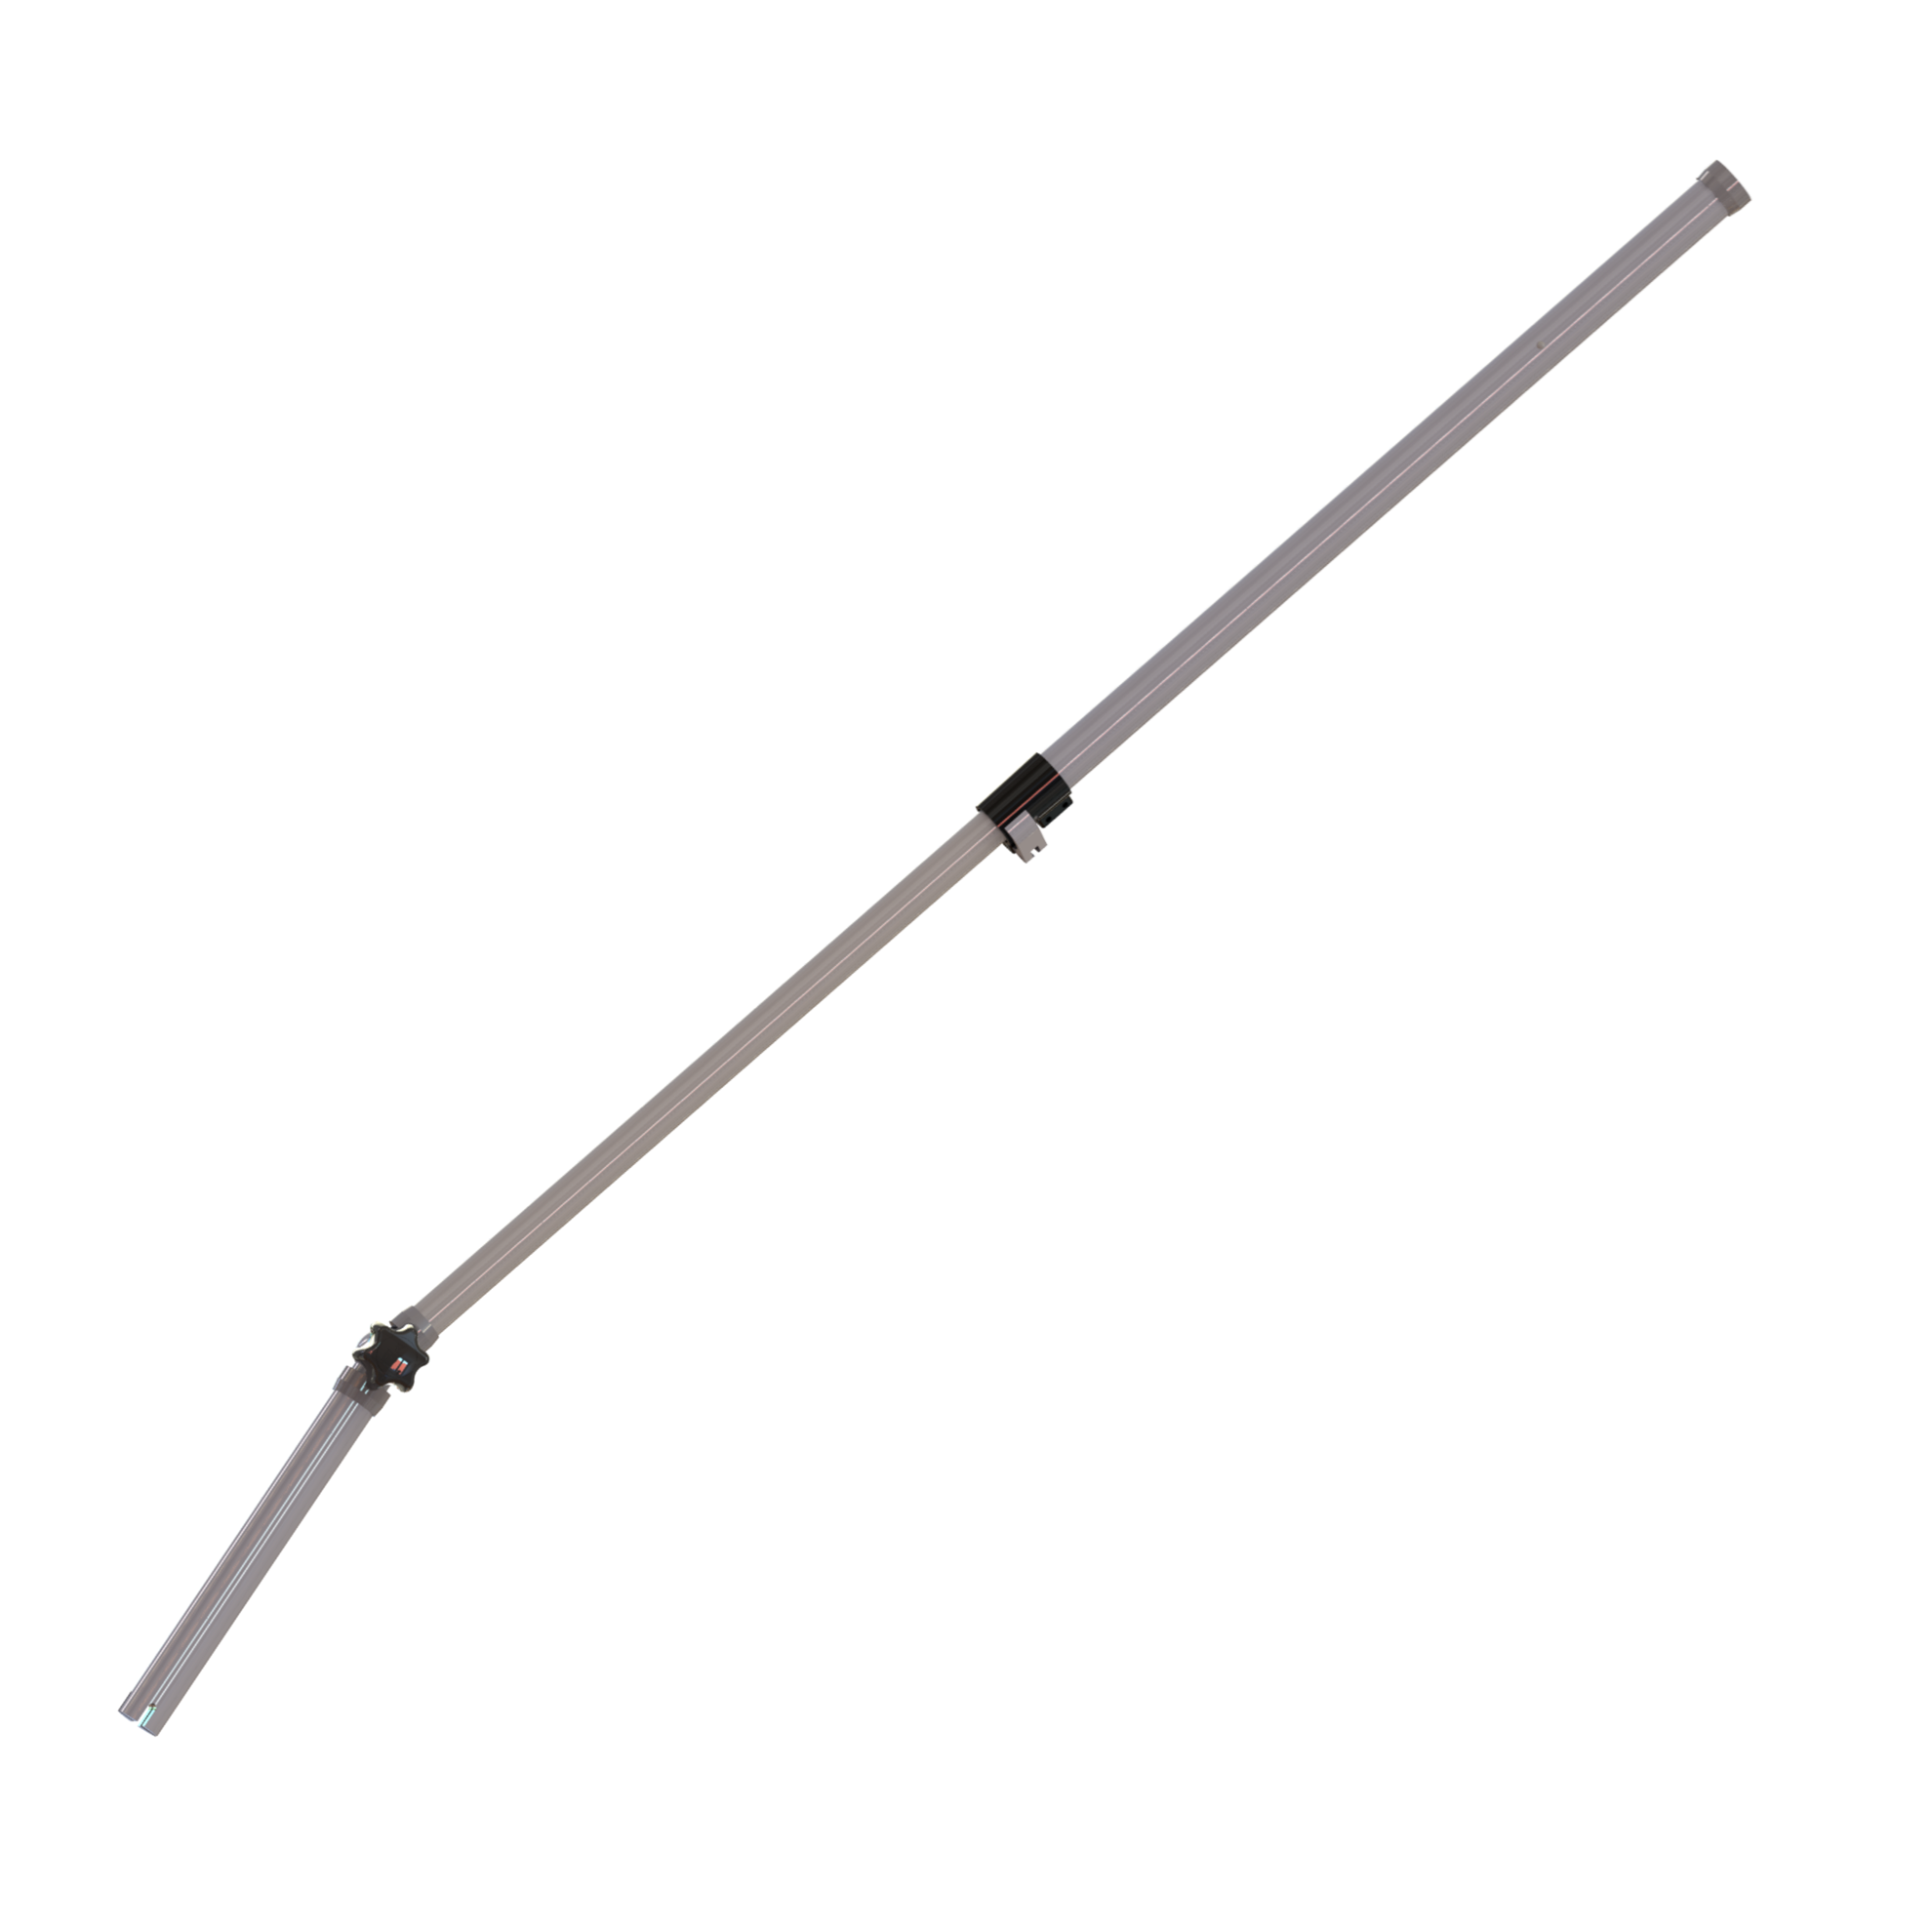 Adjustable Telescopic Fishing Rod Sport Extend Stand Bracket 2